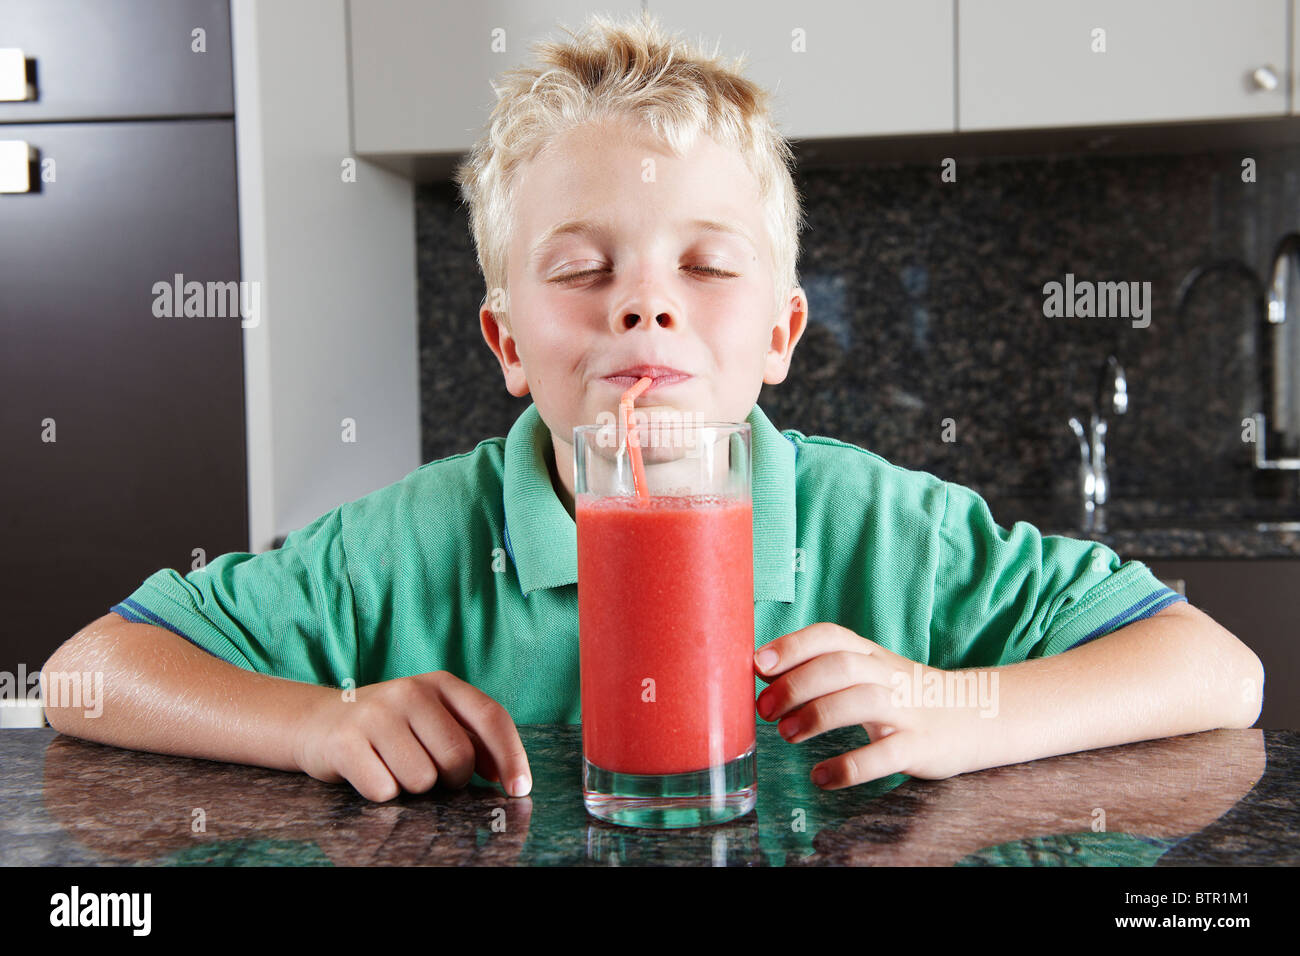 Boy drinking fruit juice with straw Stock Photo